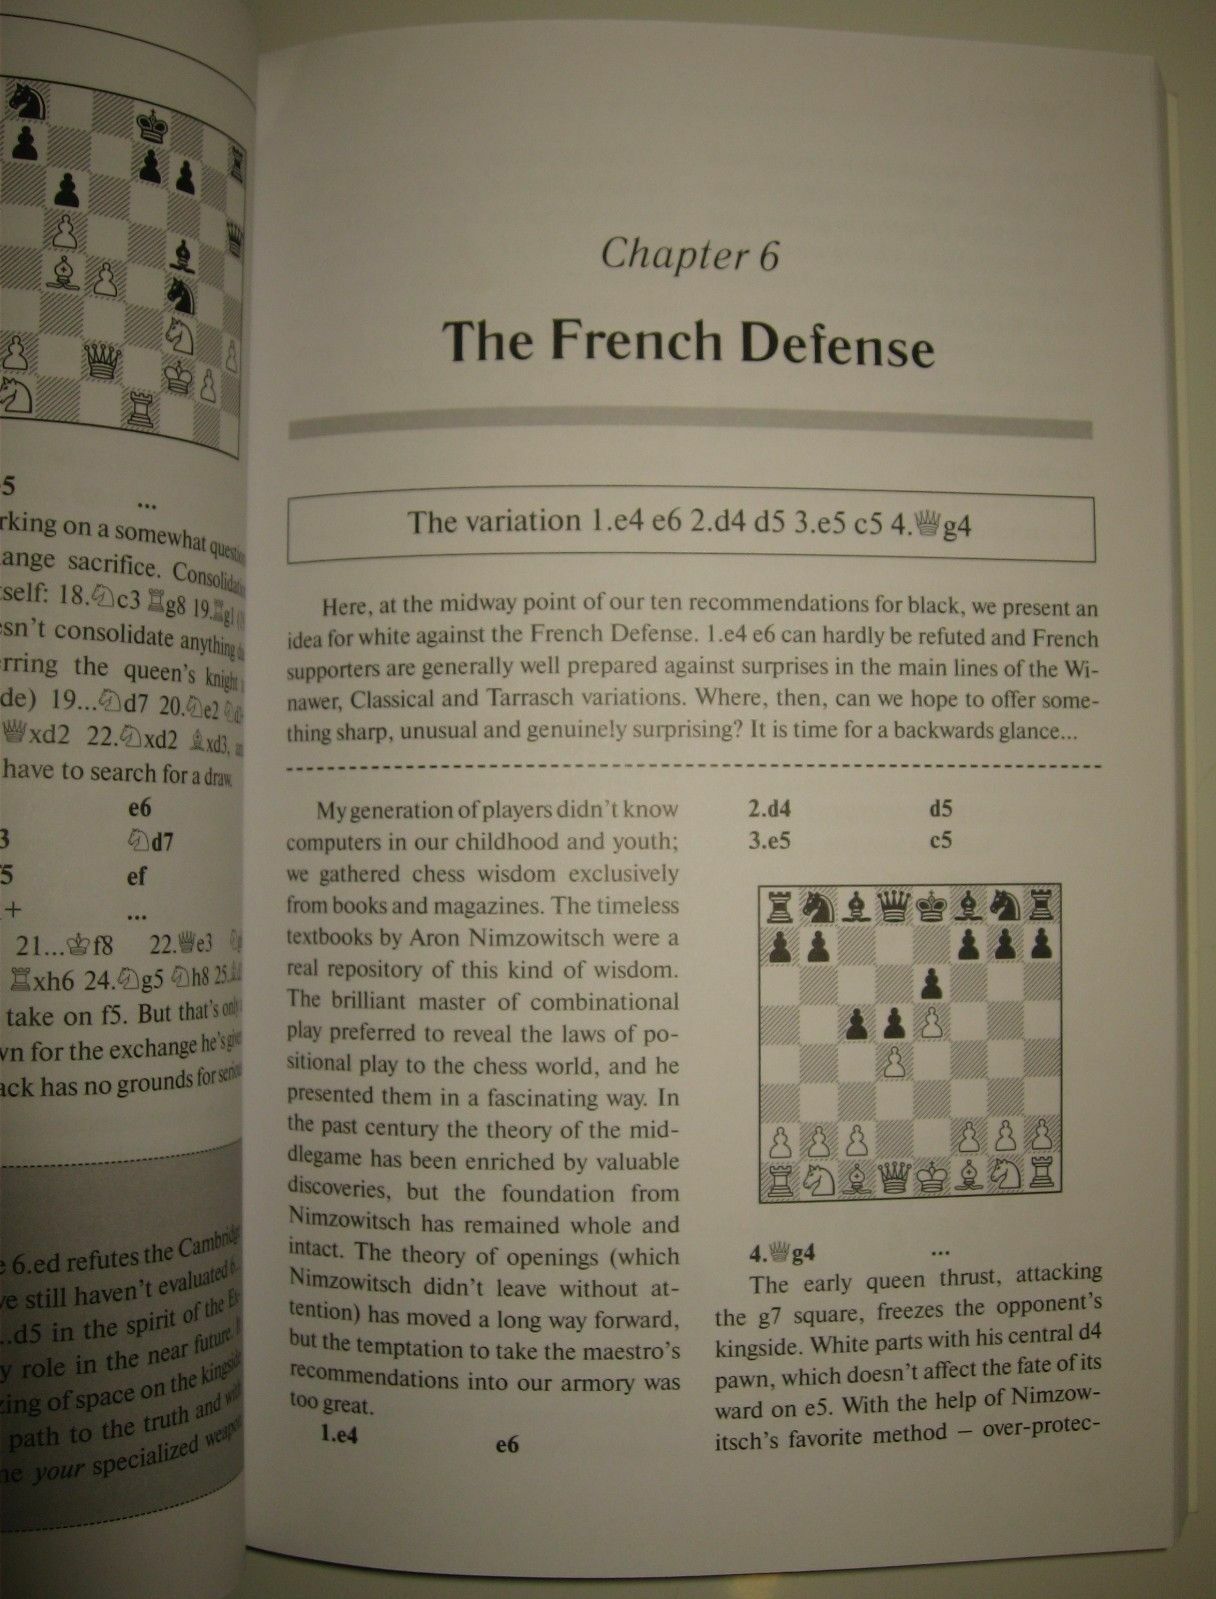 10759.American Chess Book: A. Raetsky, M. Chetverik. No Passion for Chess Fashion.2011